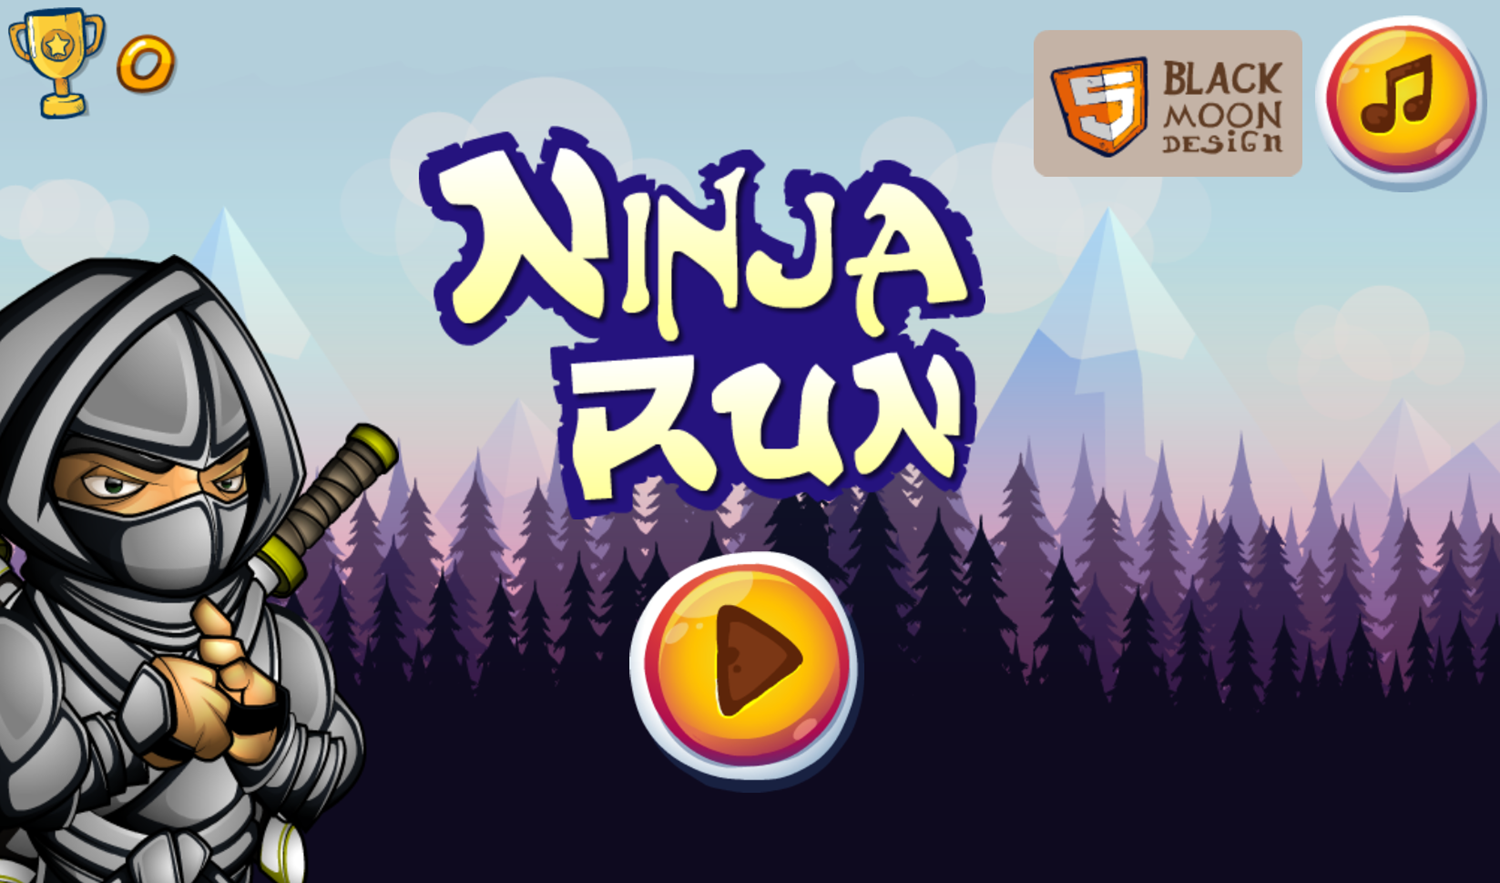 Ninja Run Game Welcome Screen Screenshot.